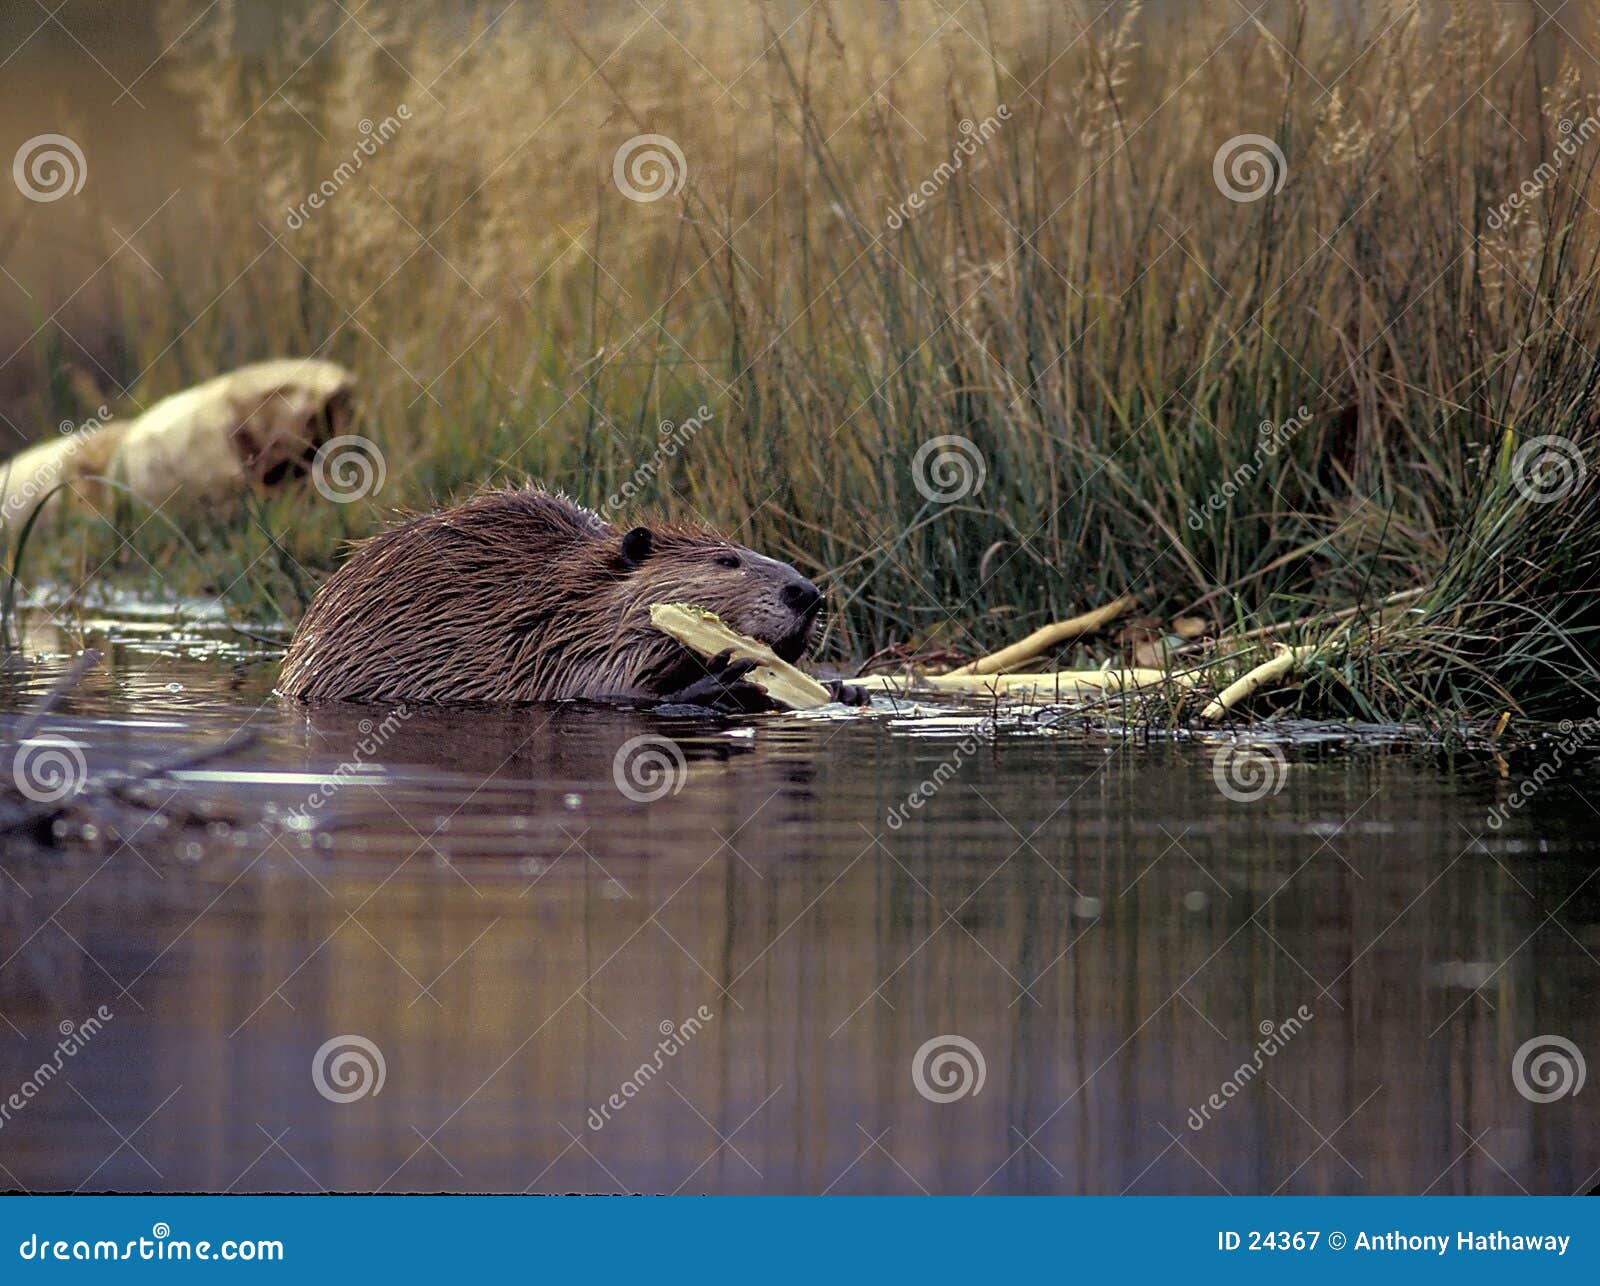 beaver gnawing on wood